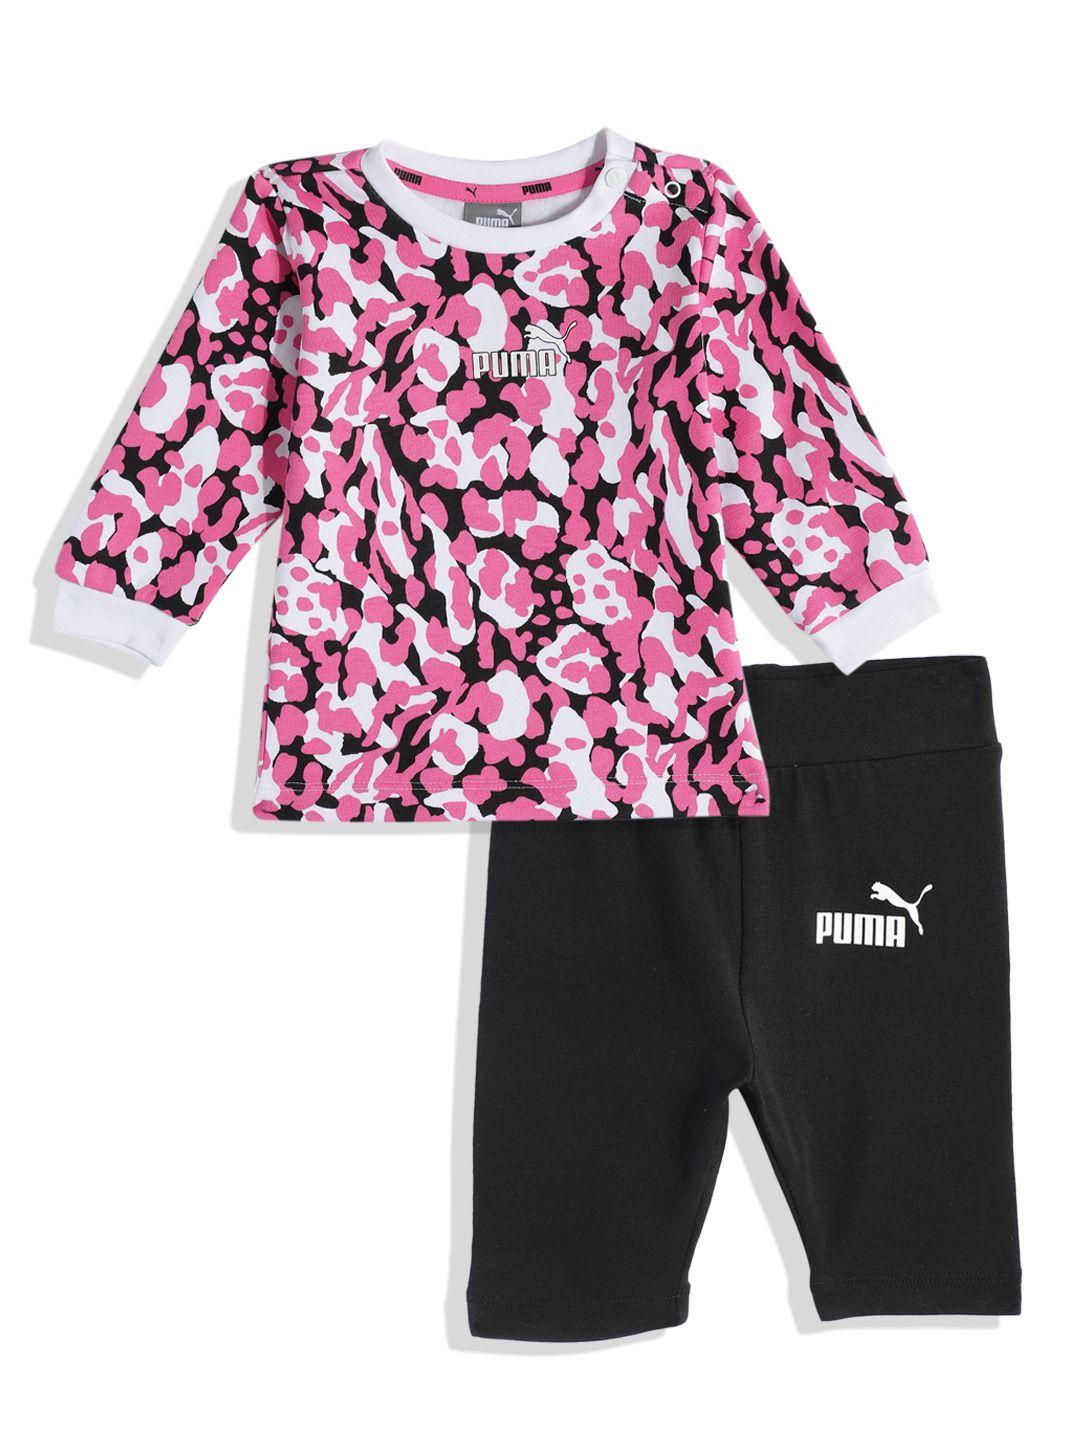 puma unisex kids pink & black printed t-shirt with leggings set